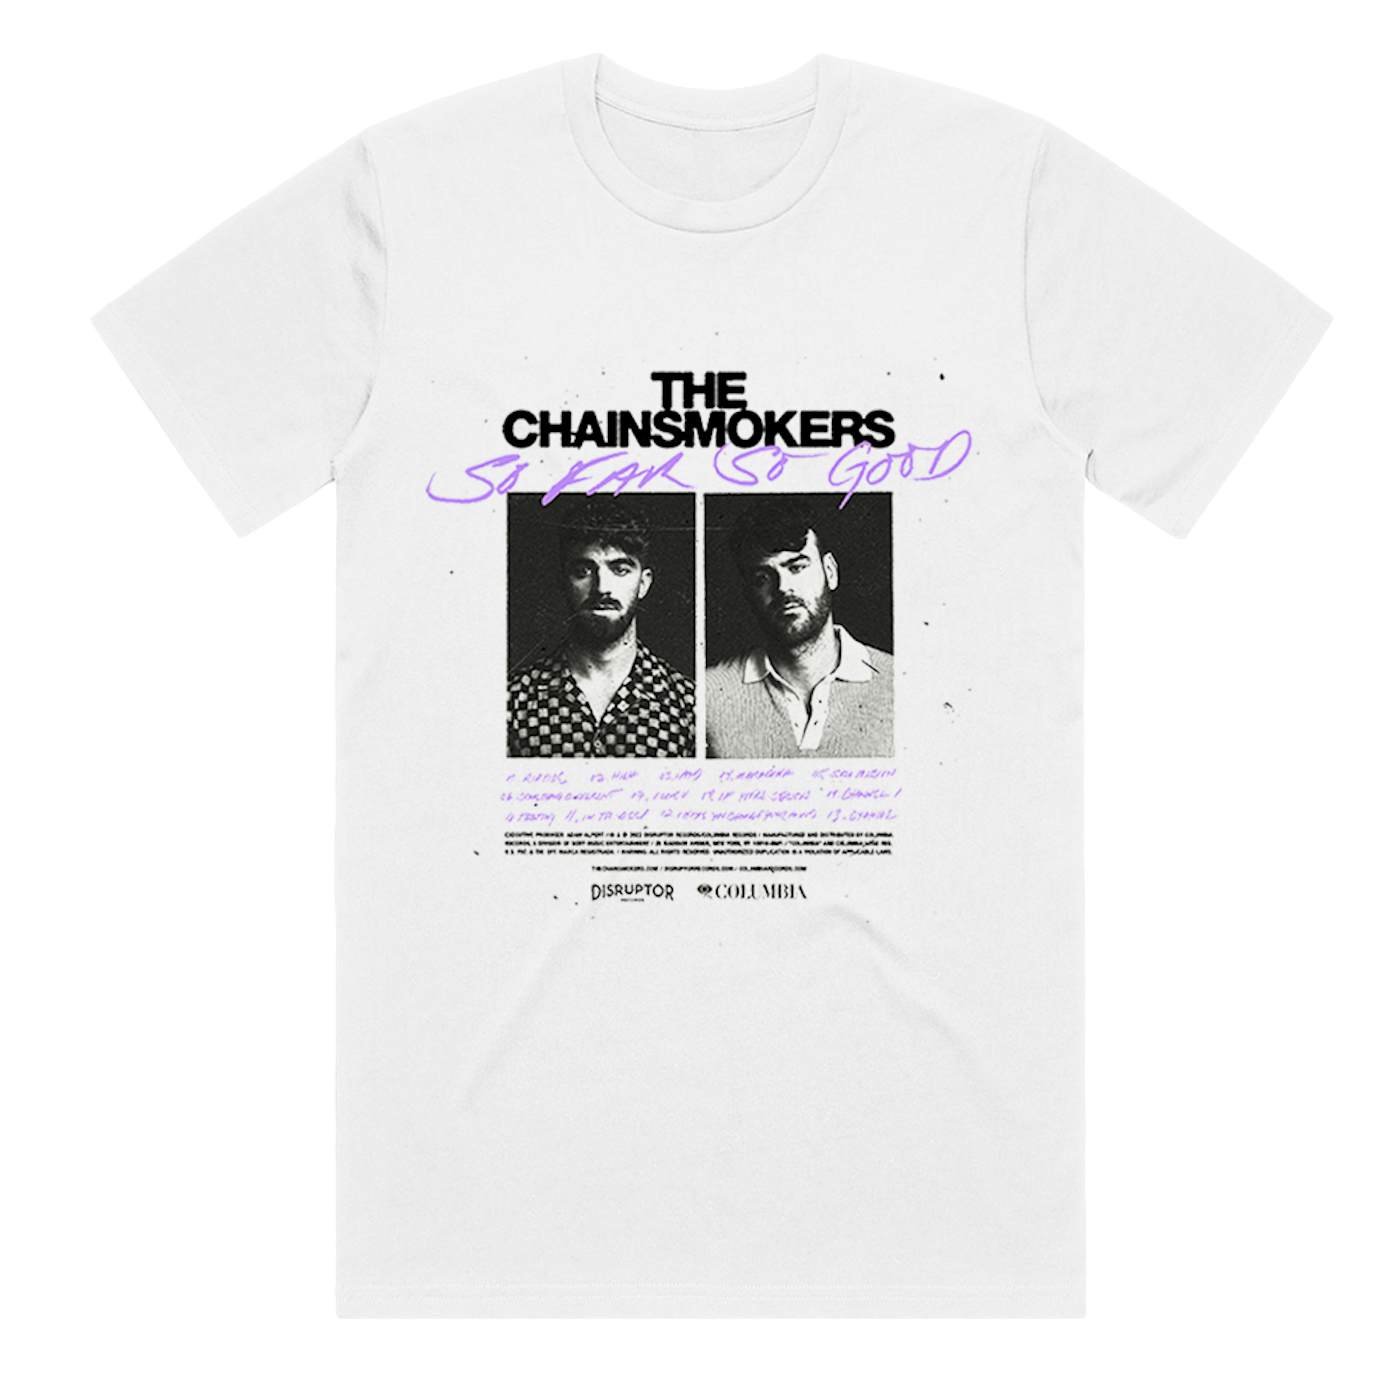 The Chainsmokers "So Far So Good" Tracklist Tee